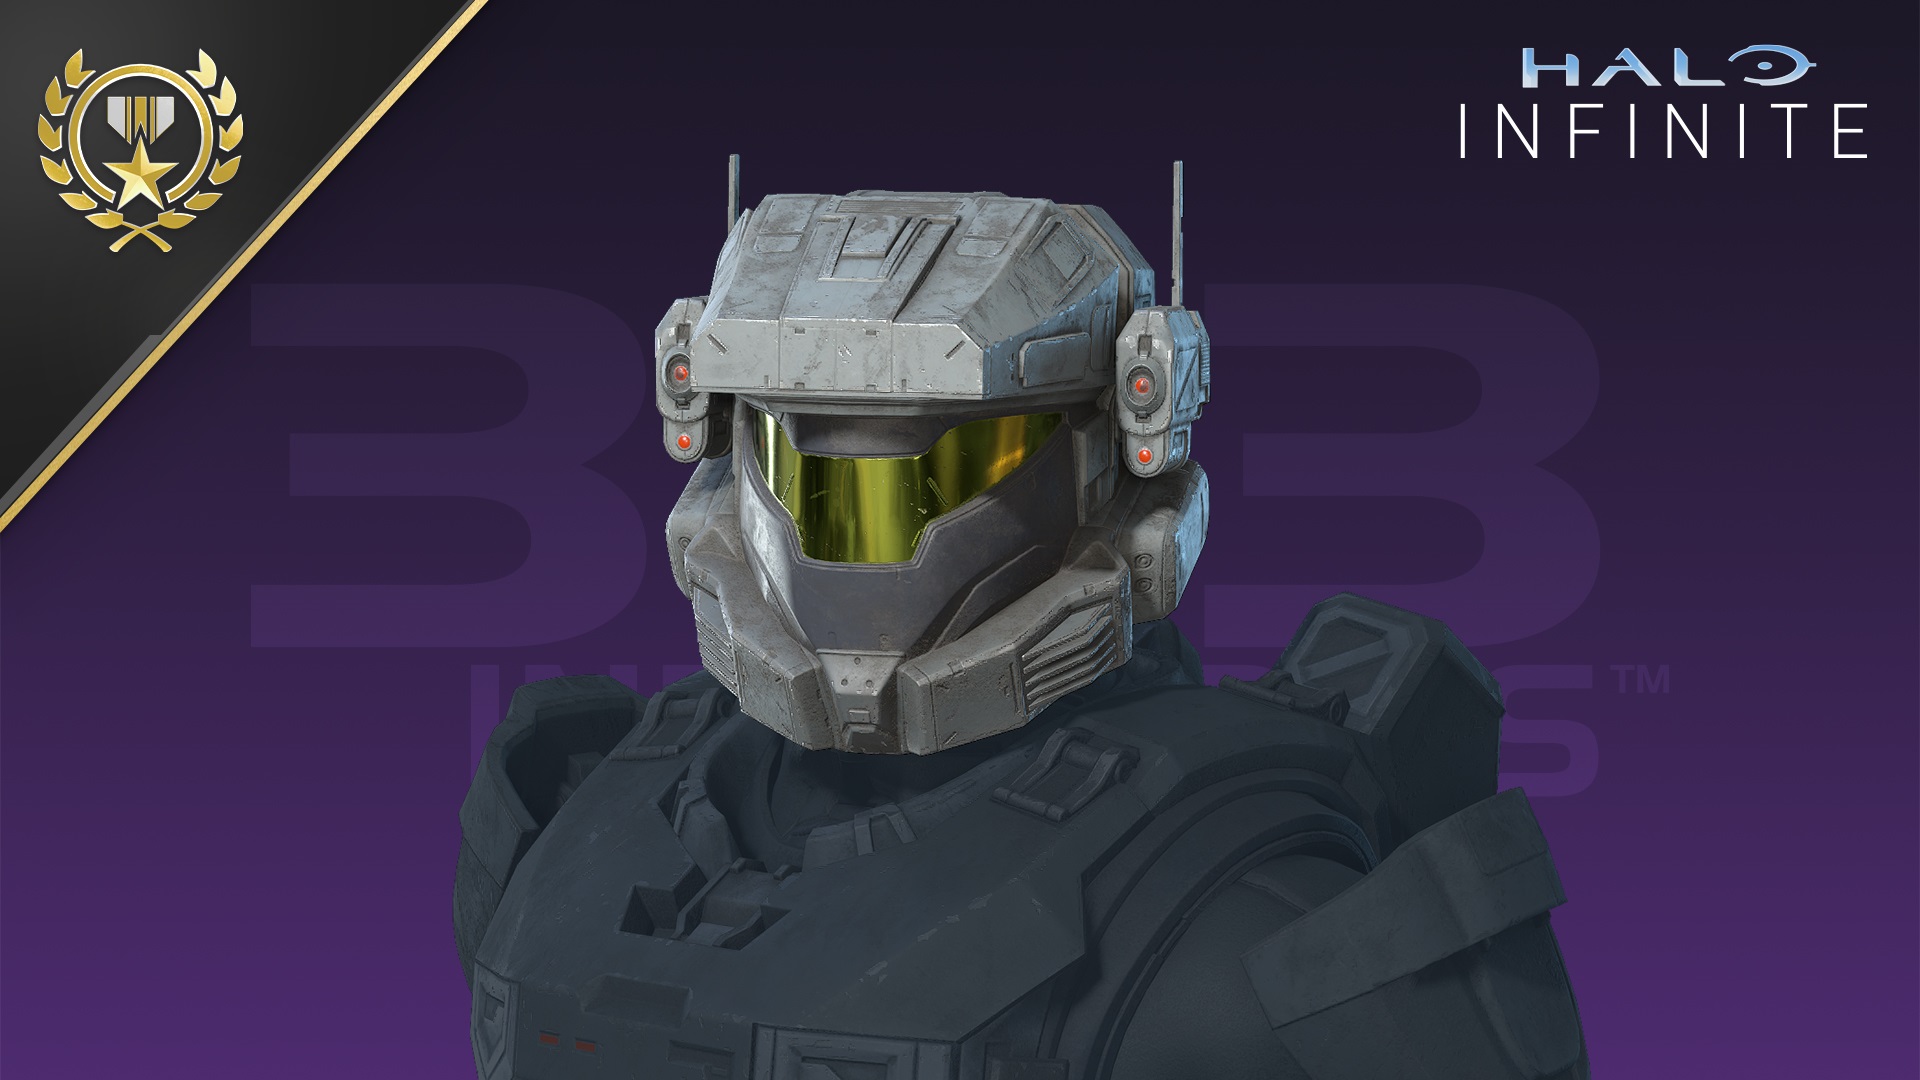 Halo Infinite image of Riz-028's helmet